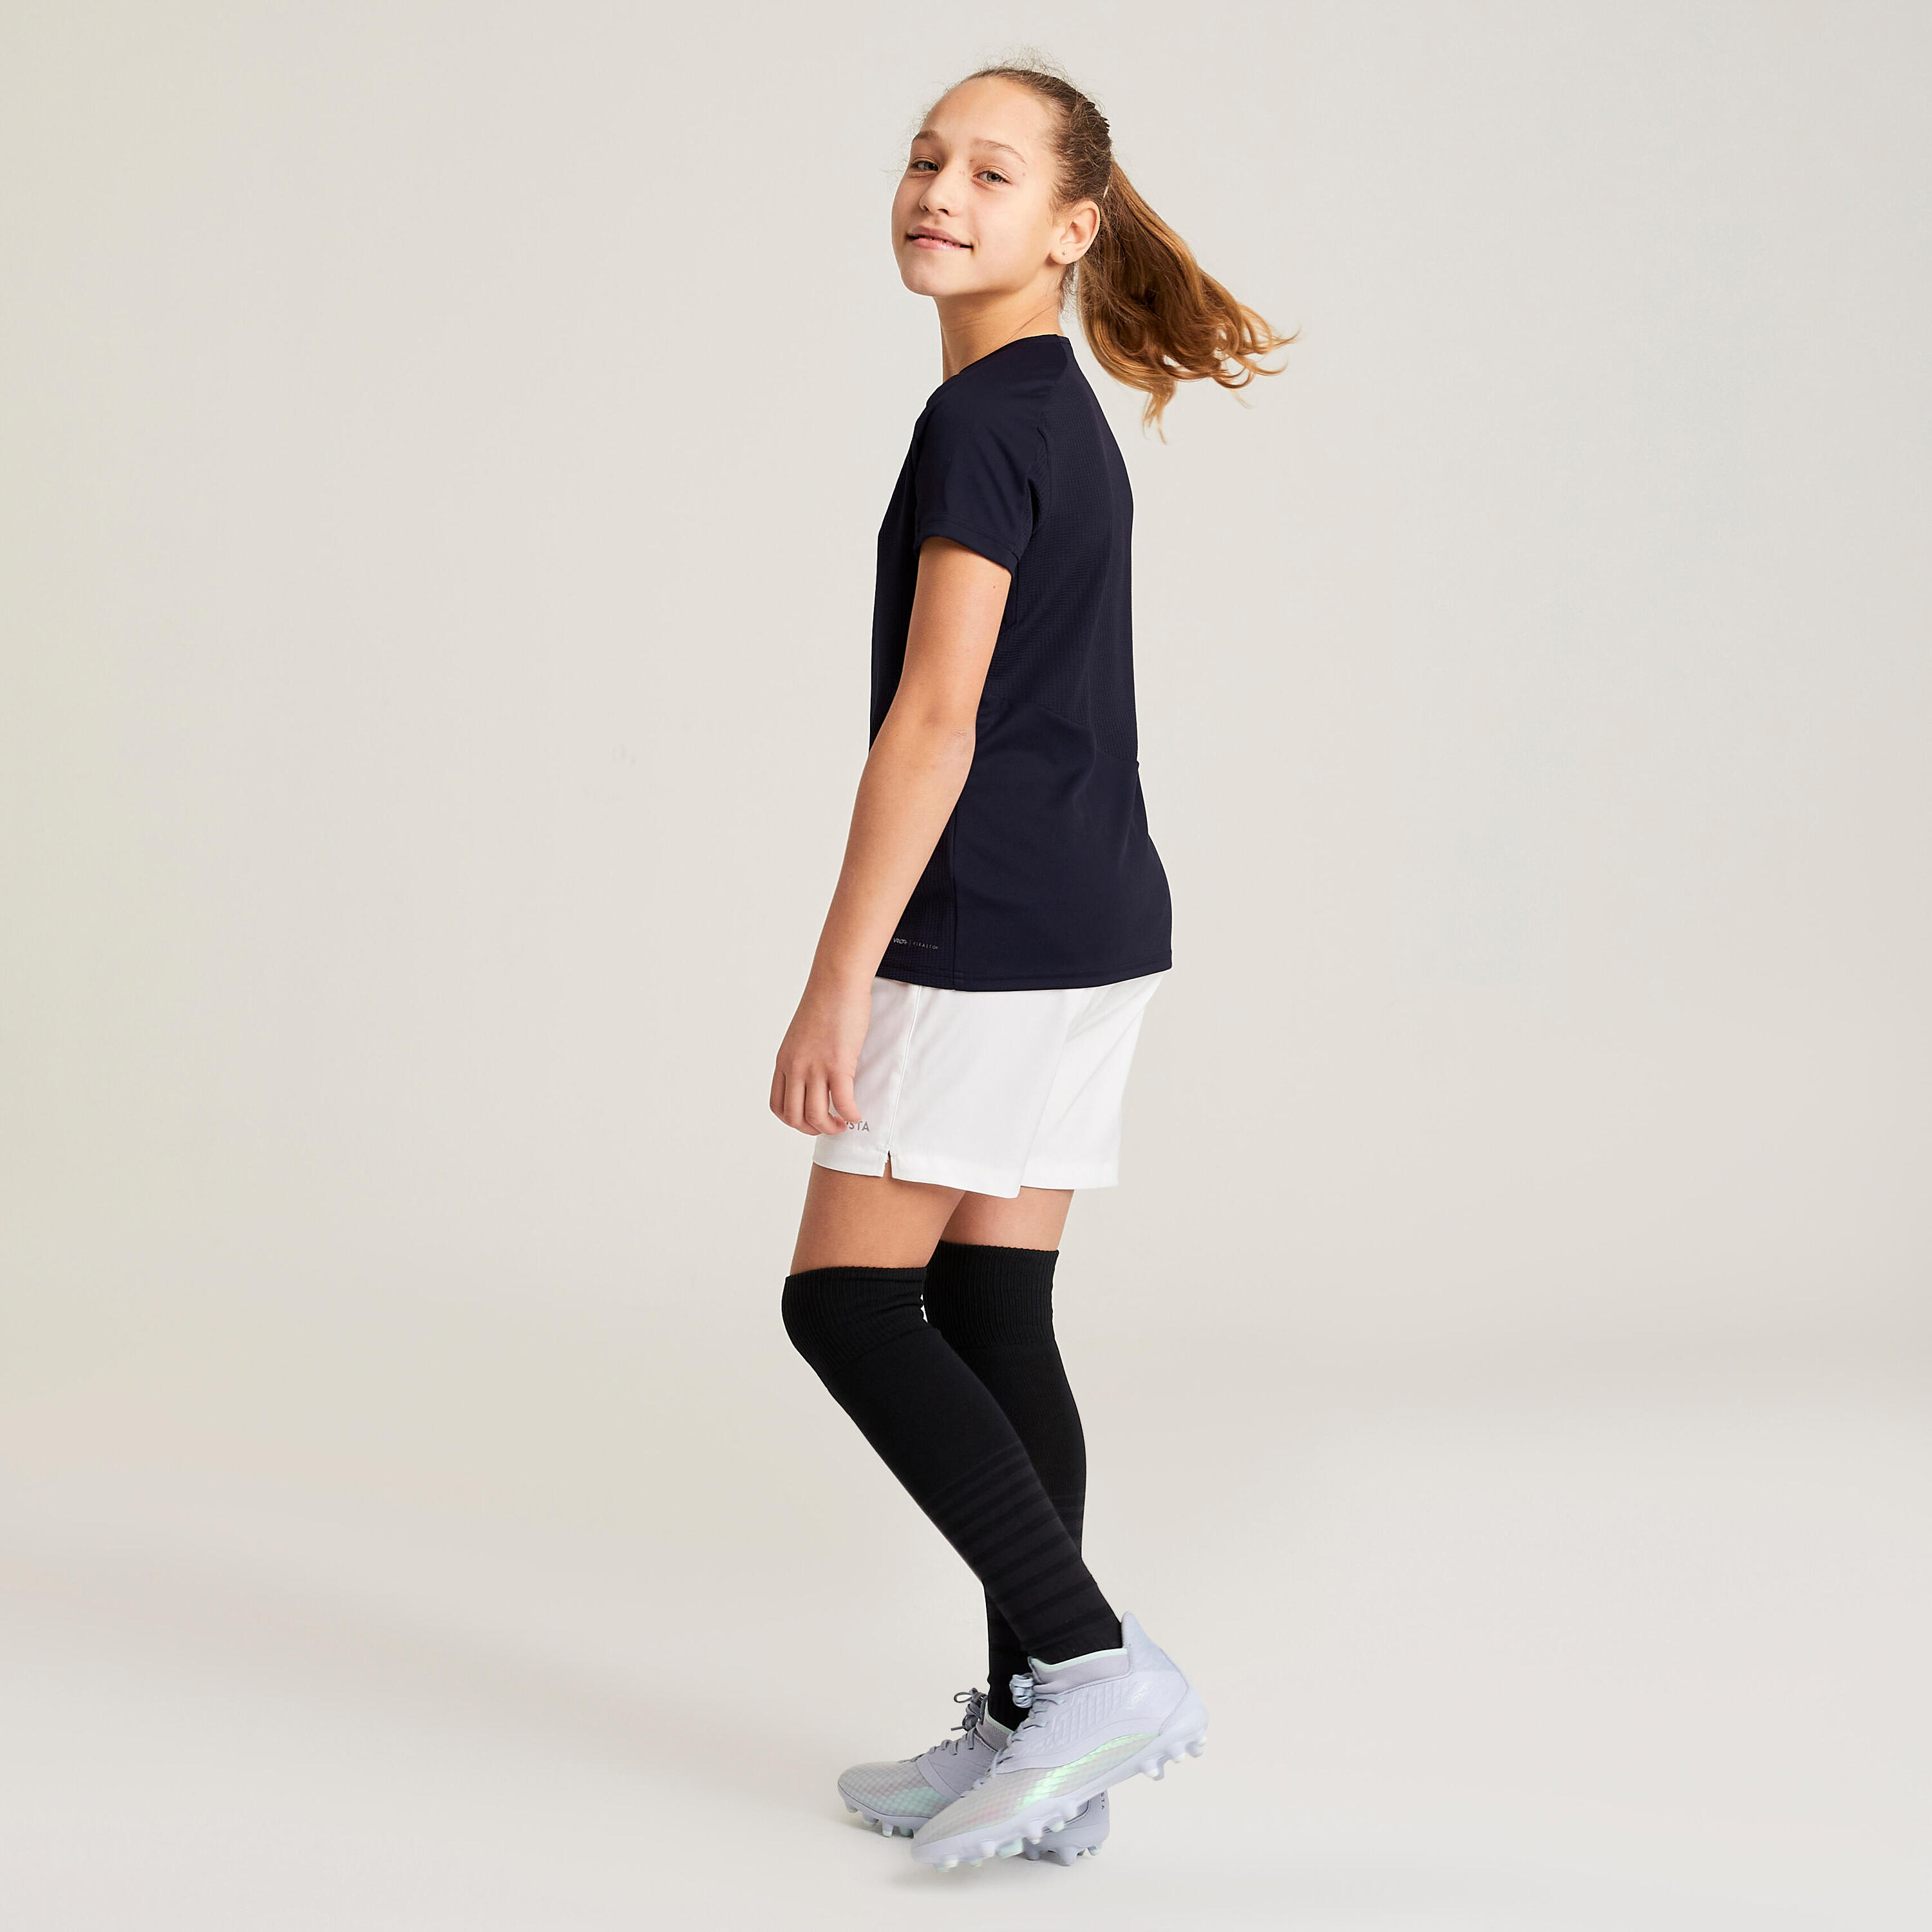 Girls' Football Shorts  - White 15/21